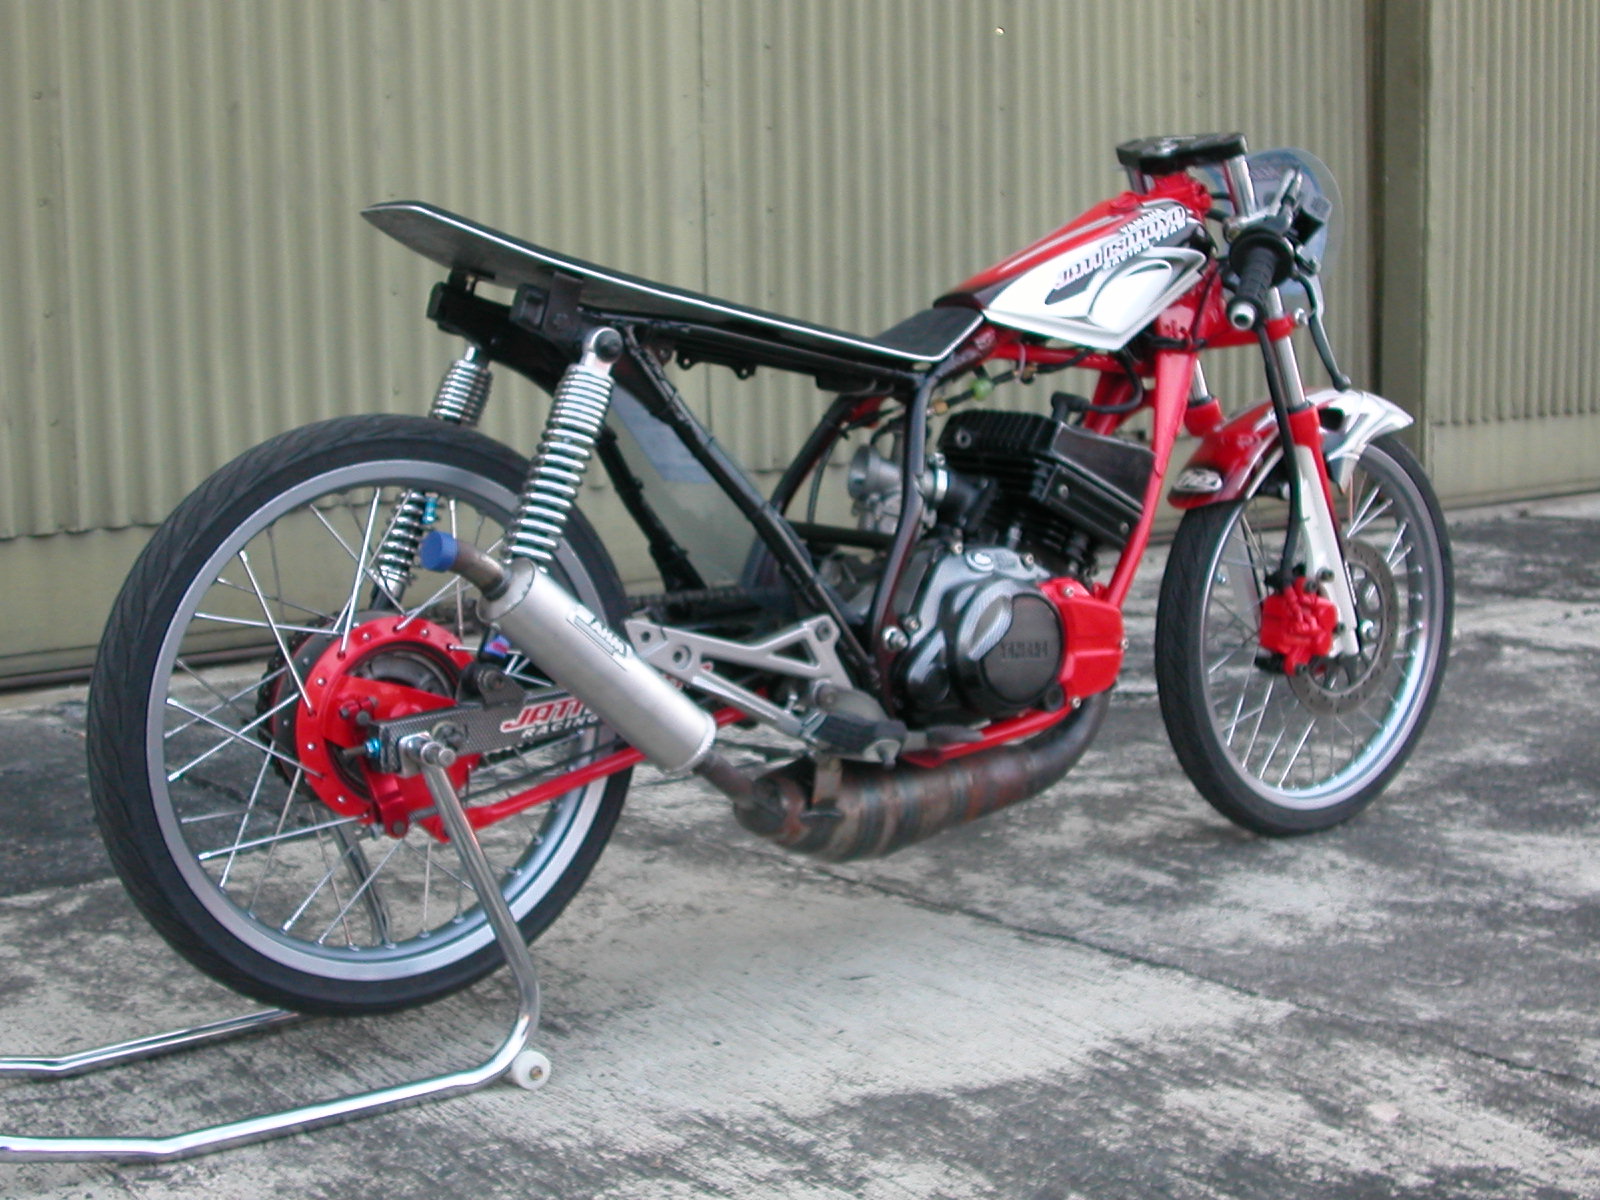 Kumpulan Gambar Sepeda Motor Mio Drag Terlengkap Dinding Motor